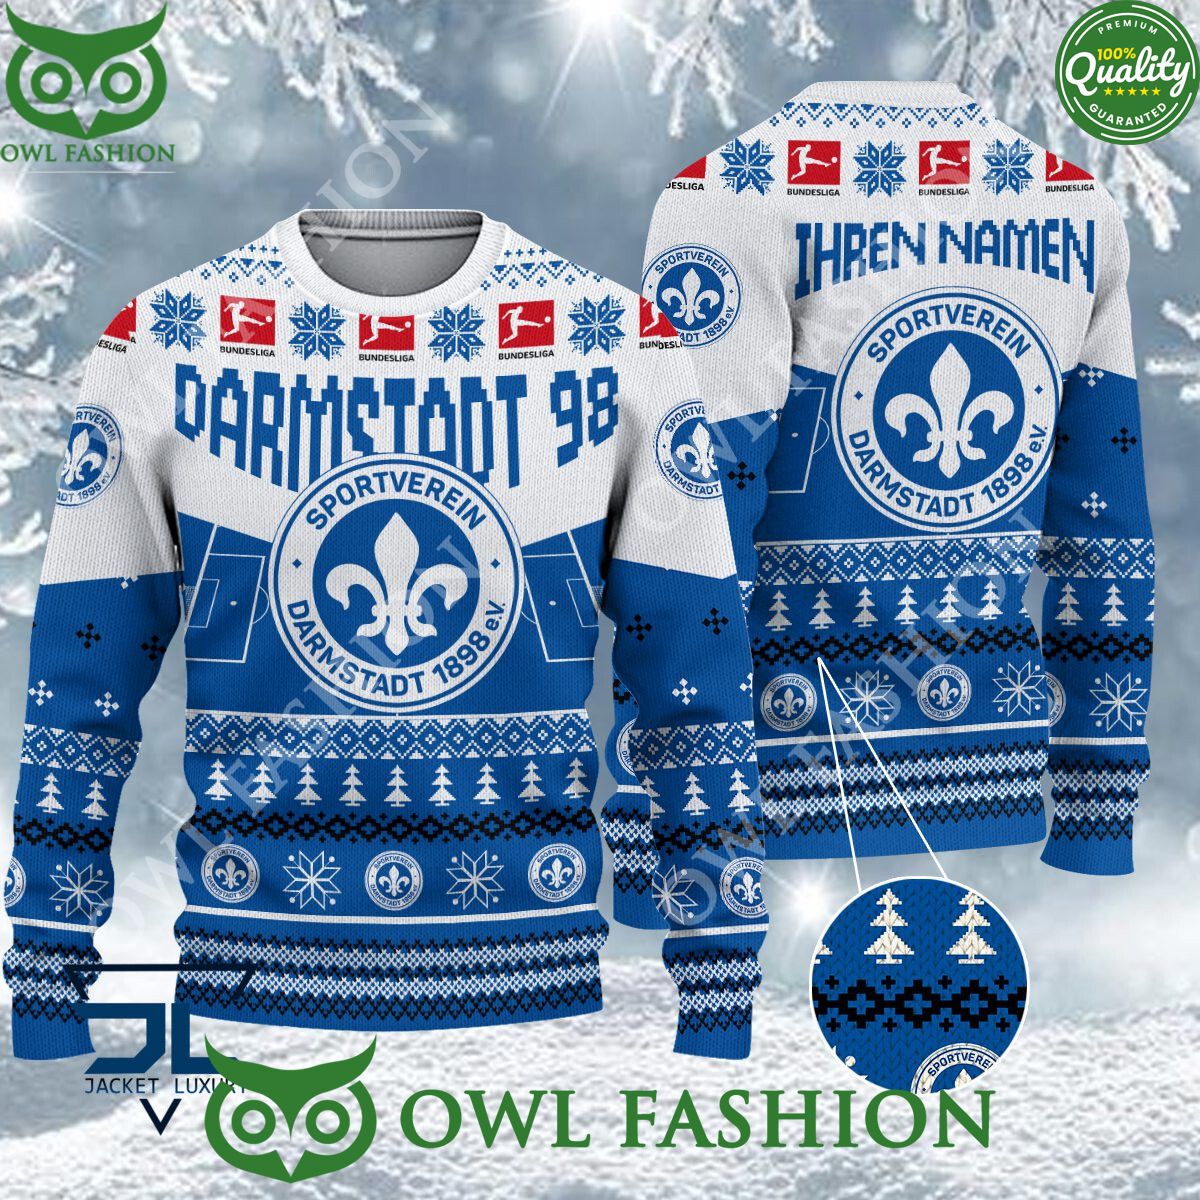 darmstadt 98 limited for bundesliga fans ugly sweater jumper 1 TTXuY.jpg